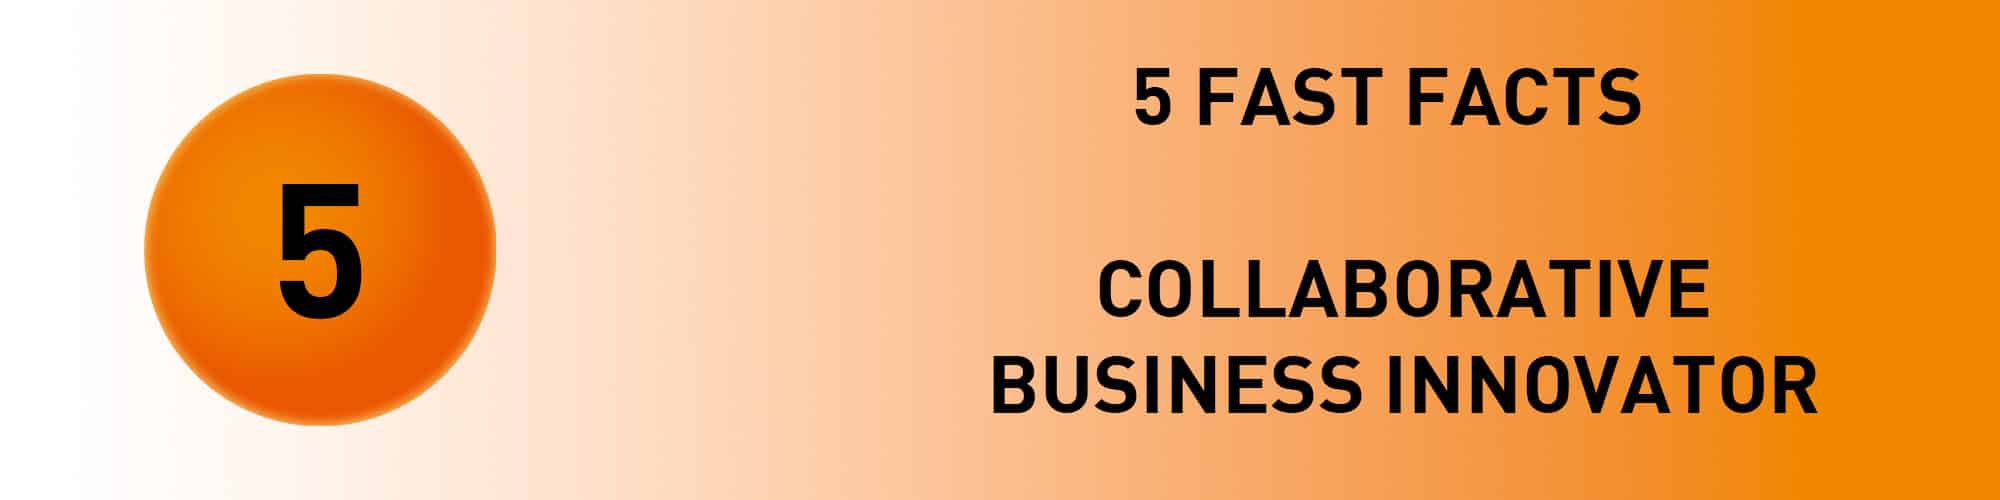 5 FAST FACTS: 3DSwymer (vormals Collaborative Business Innovator)